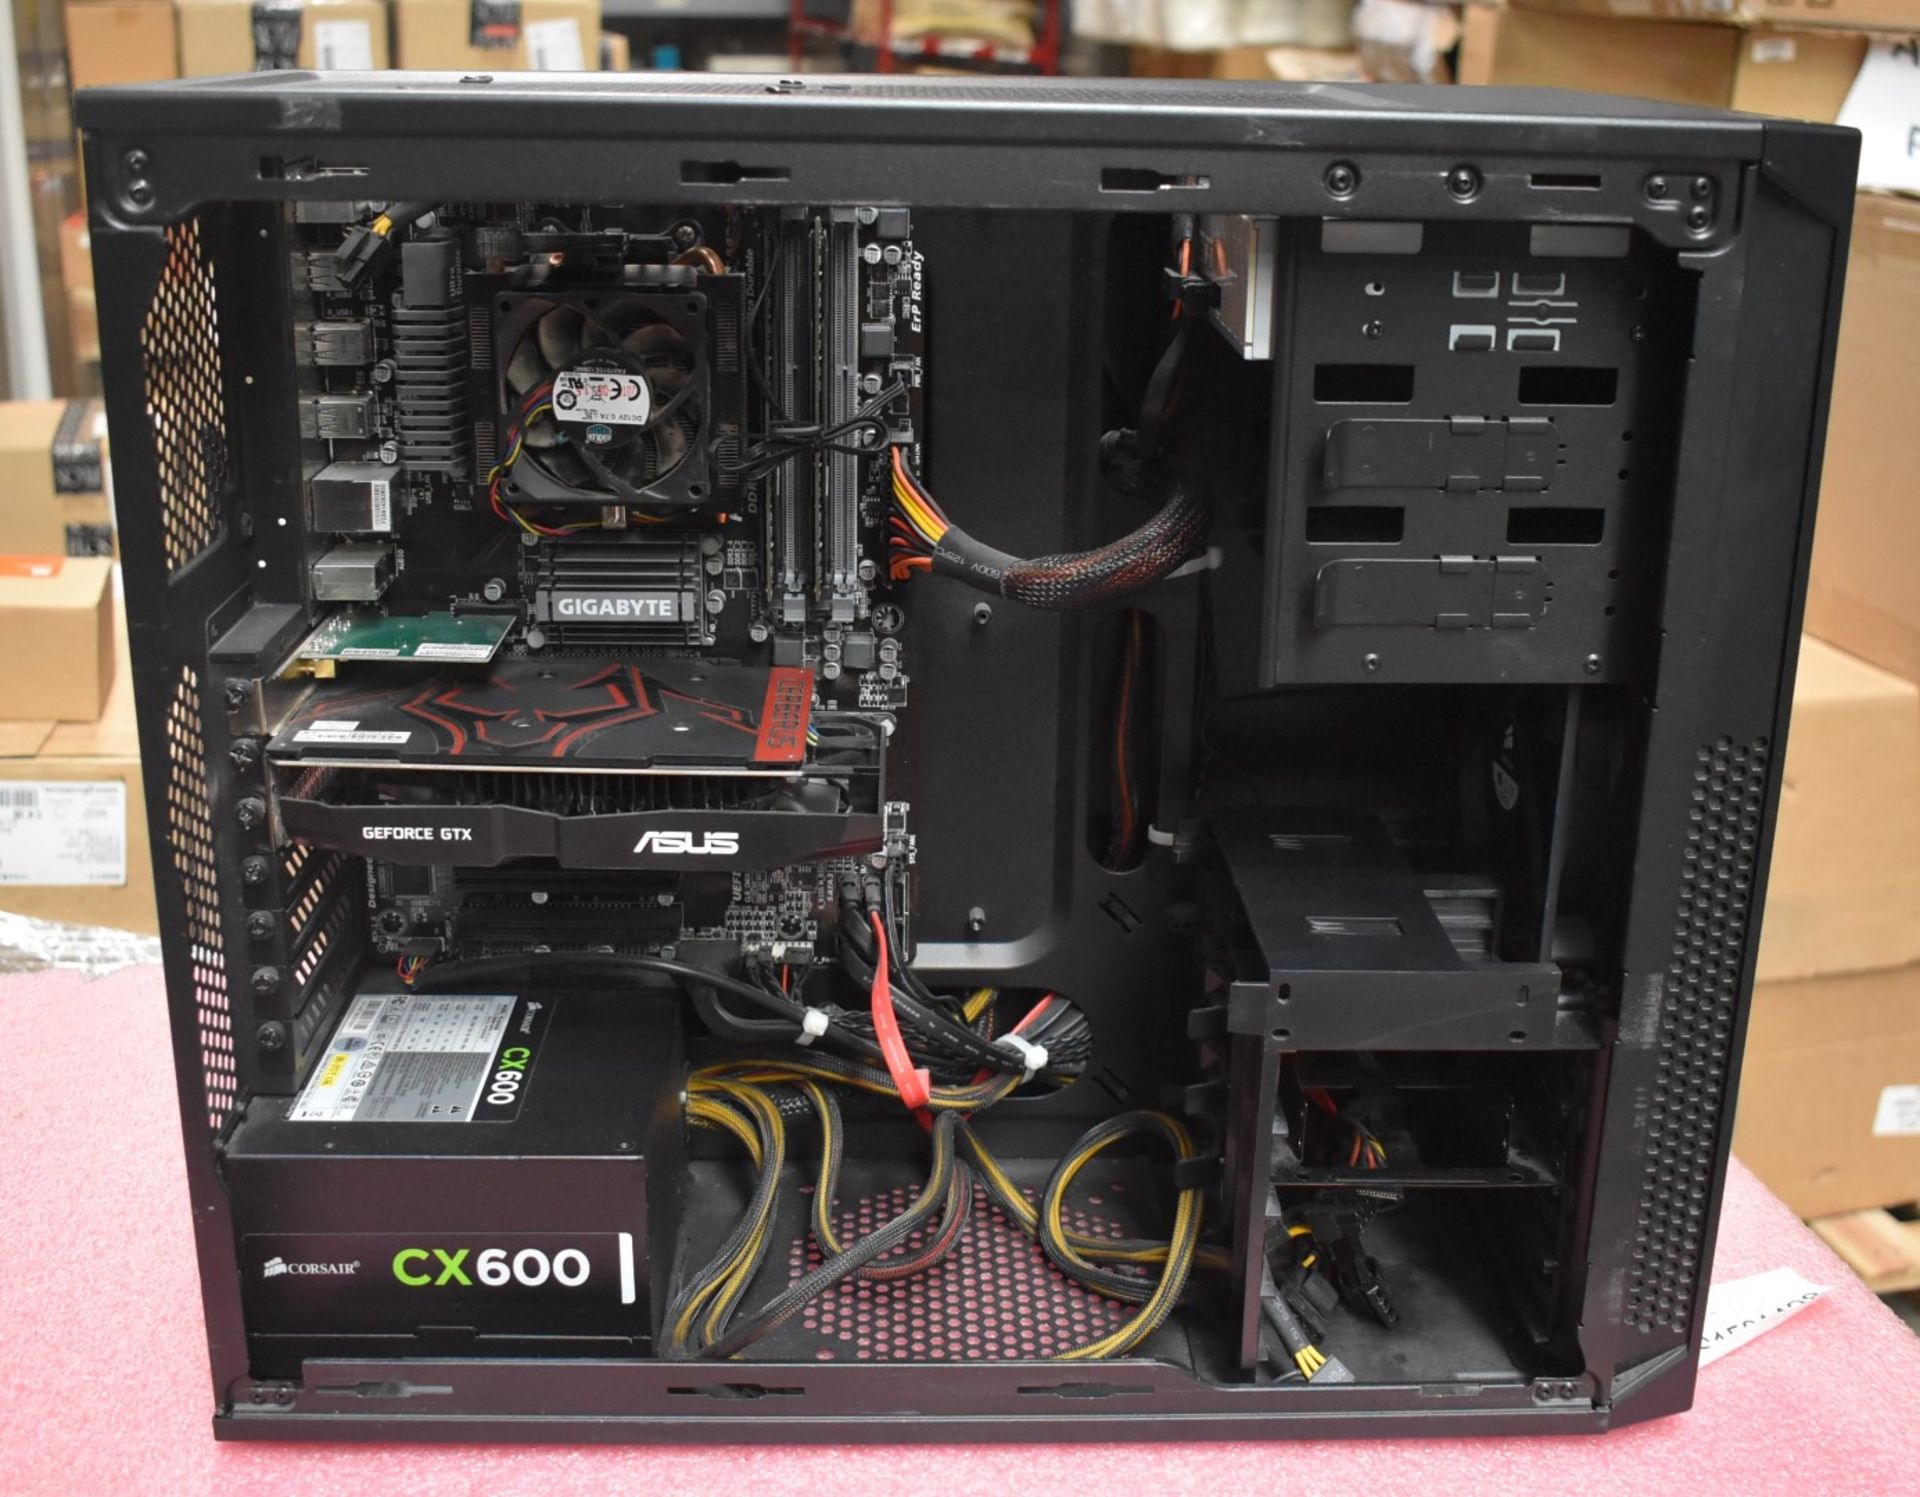 1 x Desktop Gaming PC Featuring an AMD FX6350 Processor, 8GB Ram and a GTX1050ti Graphics Card - Bild 5 aus 11